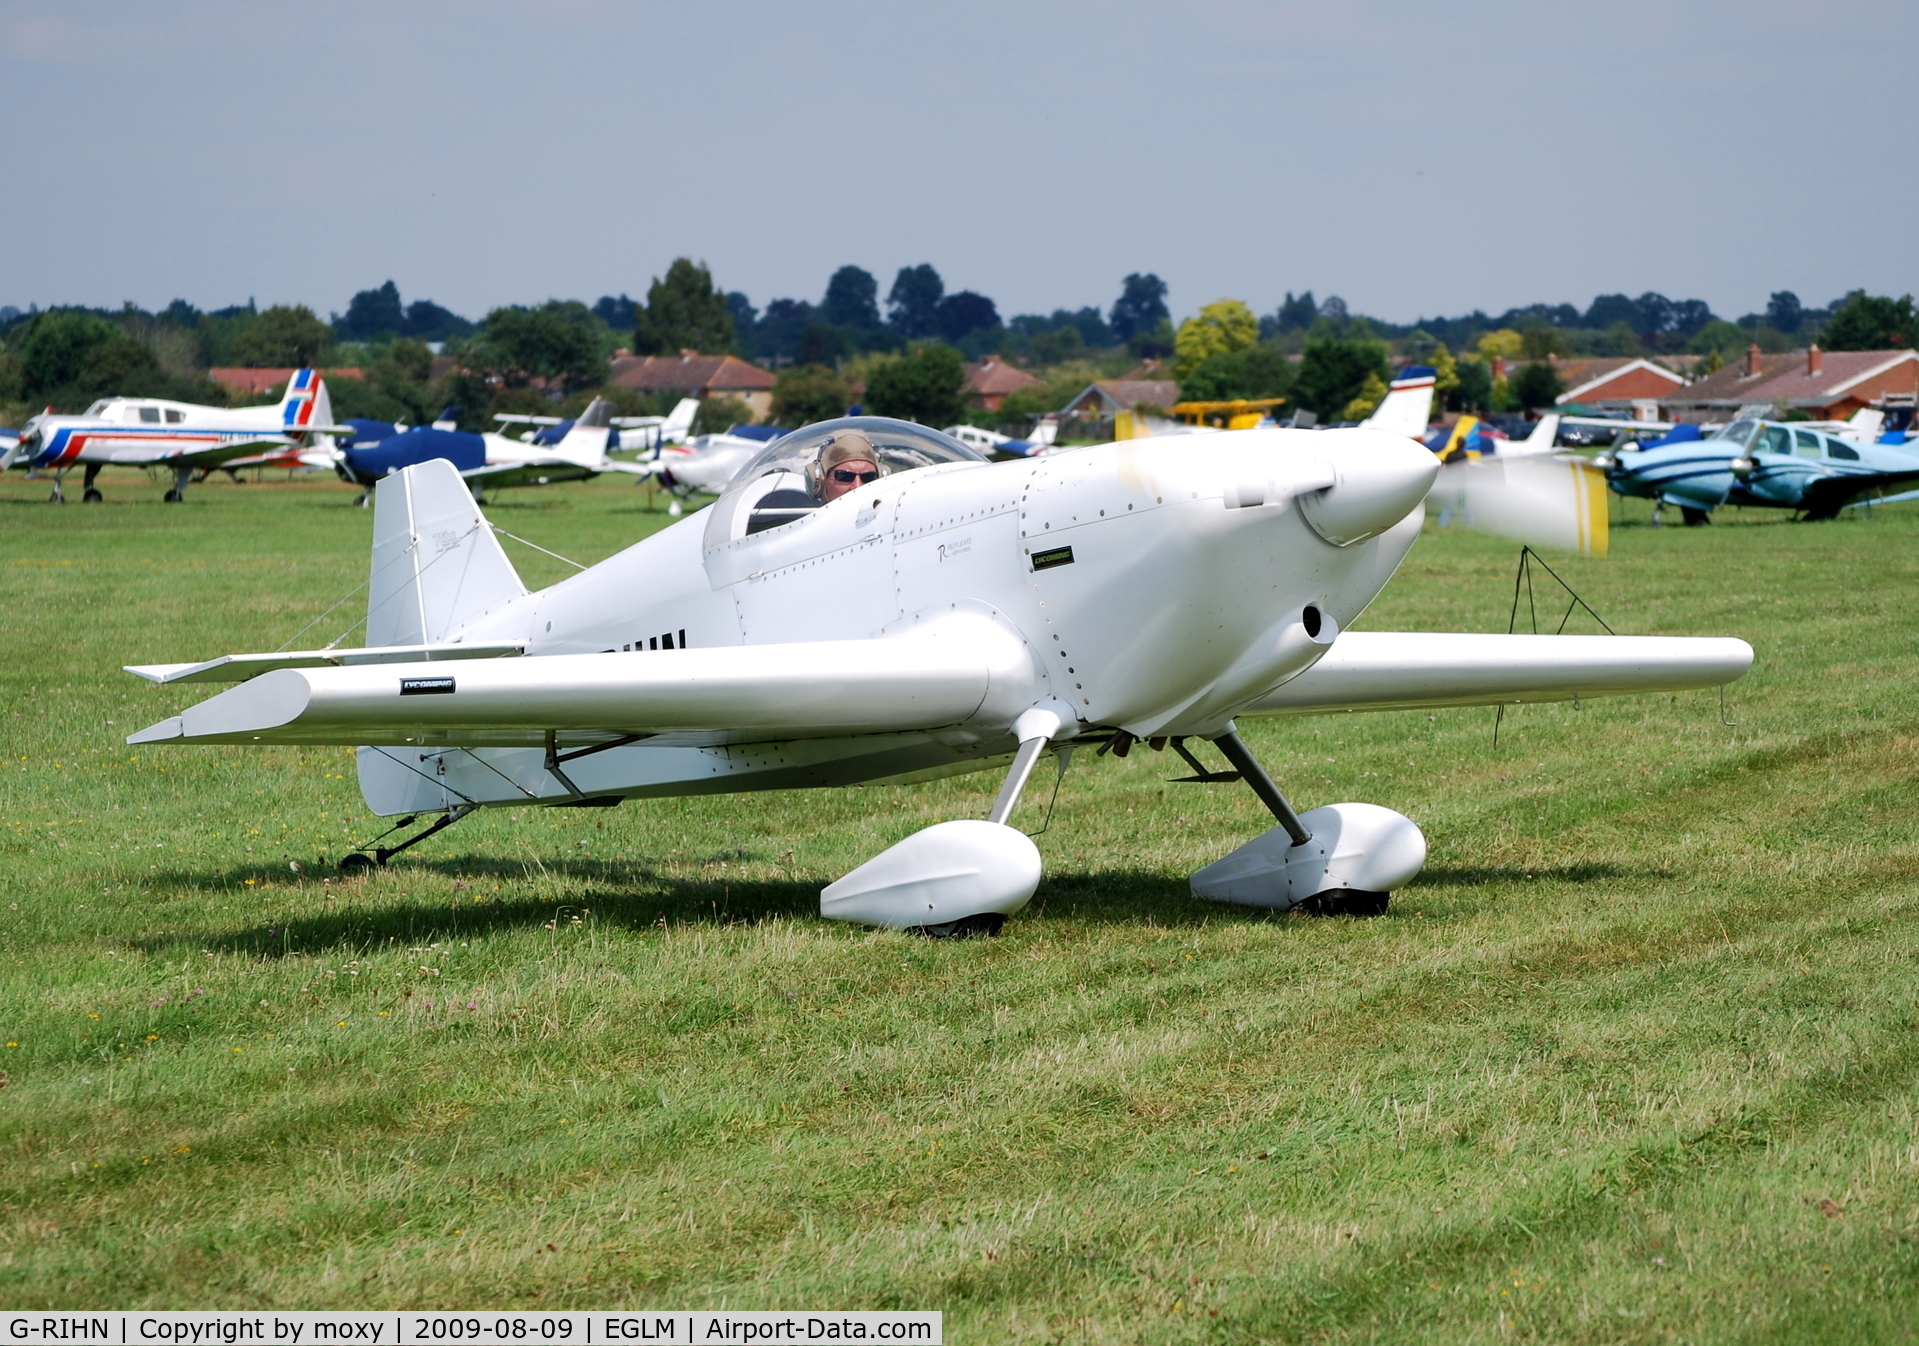 G-RIHN, 2004 Rihn DR-107 One Design C/N PFA 264-14201, DR107 ONE DESIGN after splendid aerobatic display at White Waltham